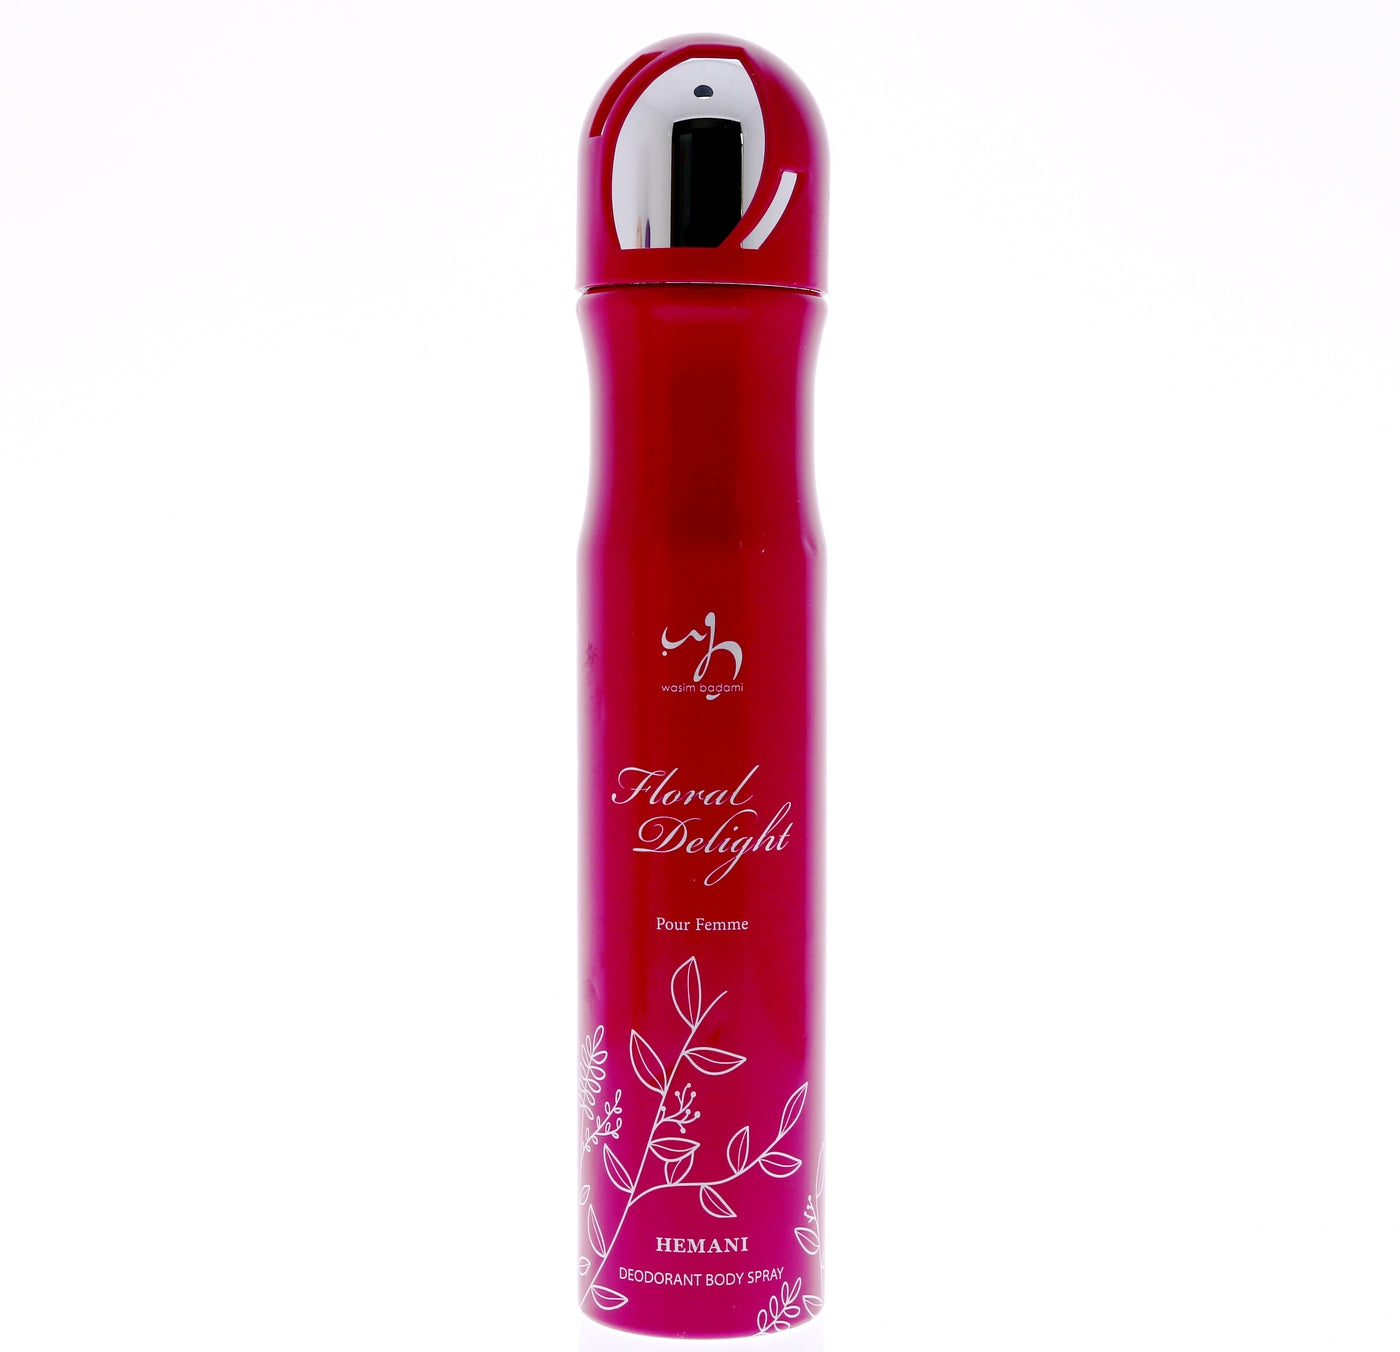 wb-by-hemani-floral-delight-deodorant-spray-200ml-7-oz-for-women-1